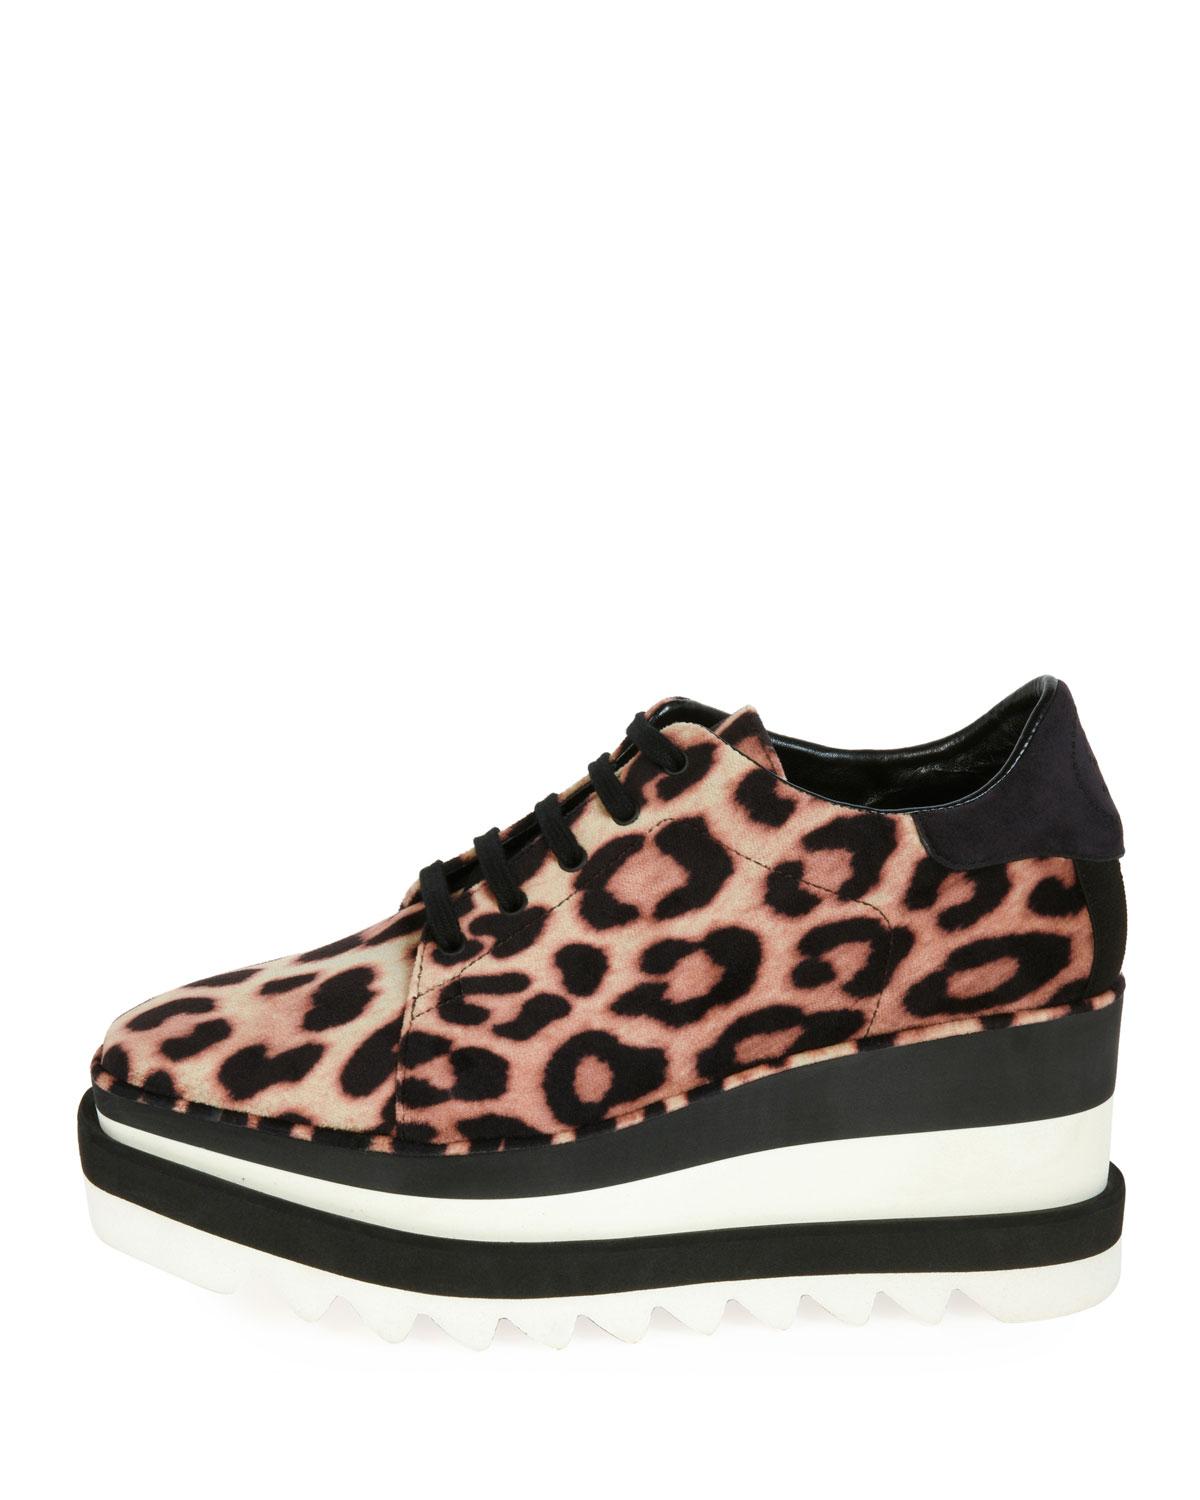 Stella McCartney Rubber Sneakelyse Leopard Wedge Sneakers in Brown - Lyst